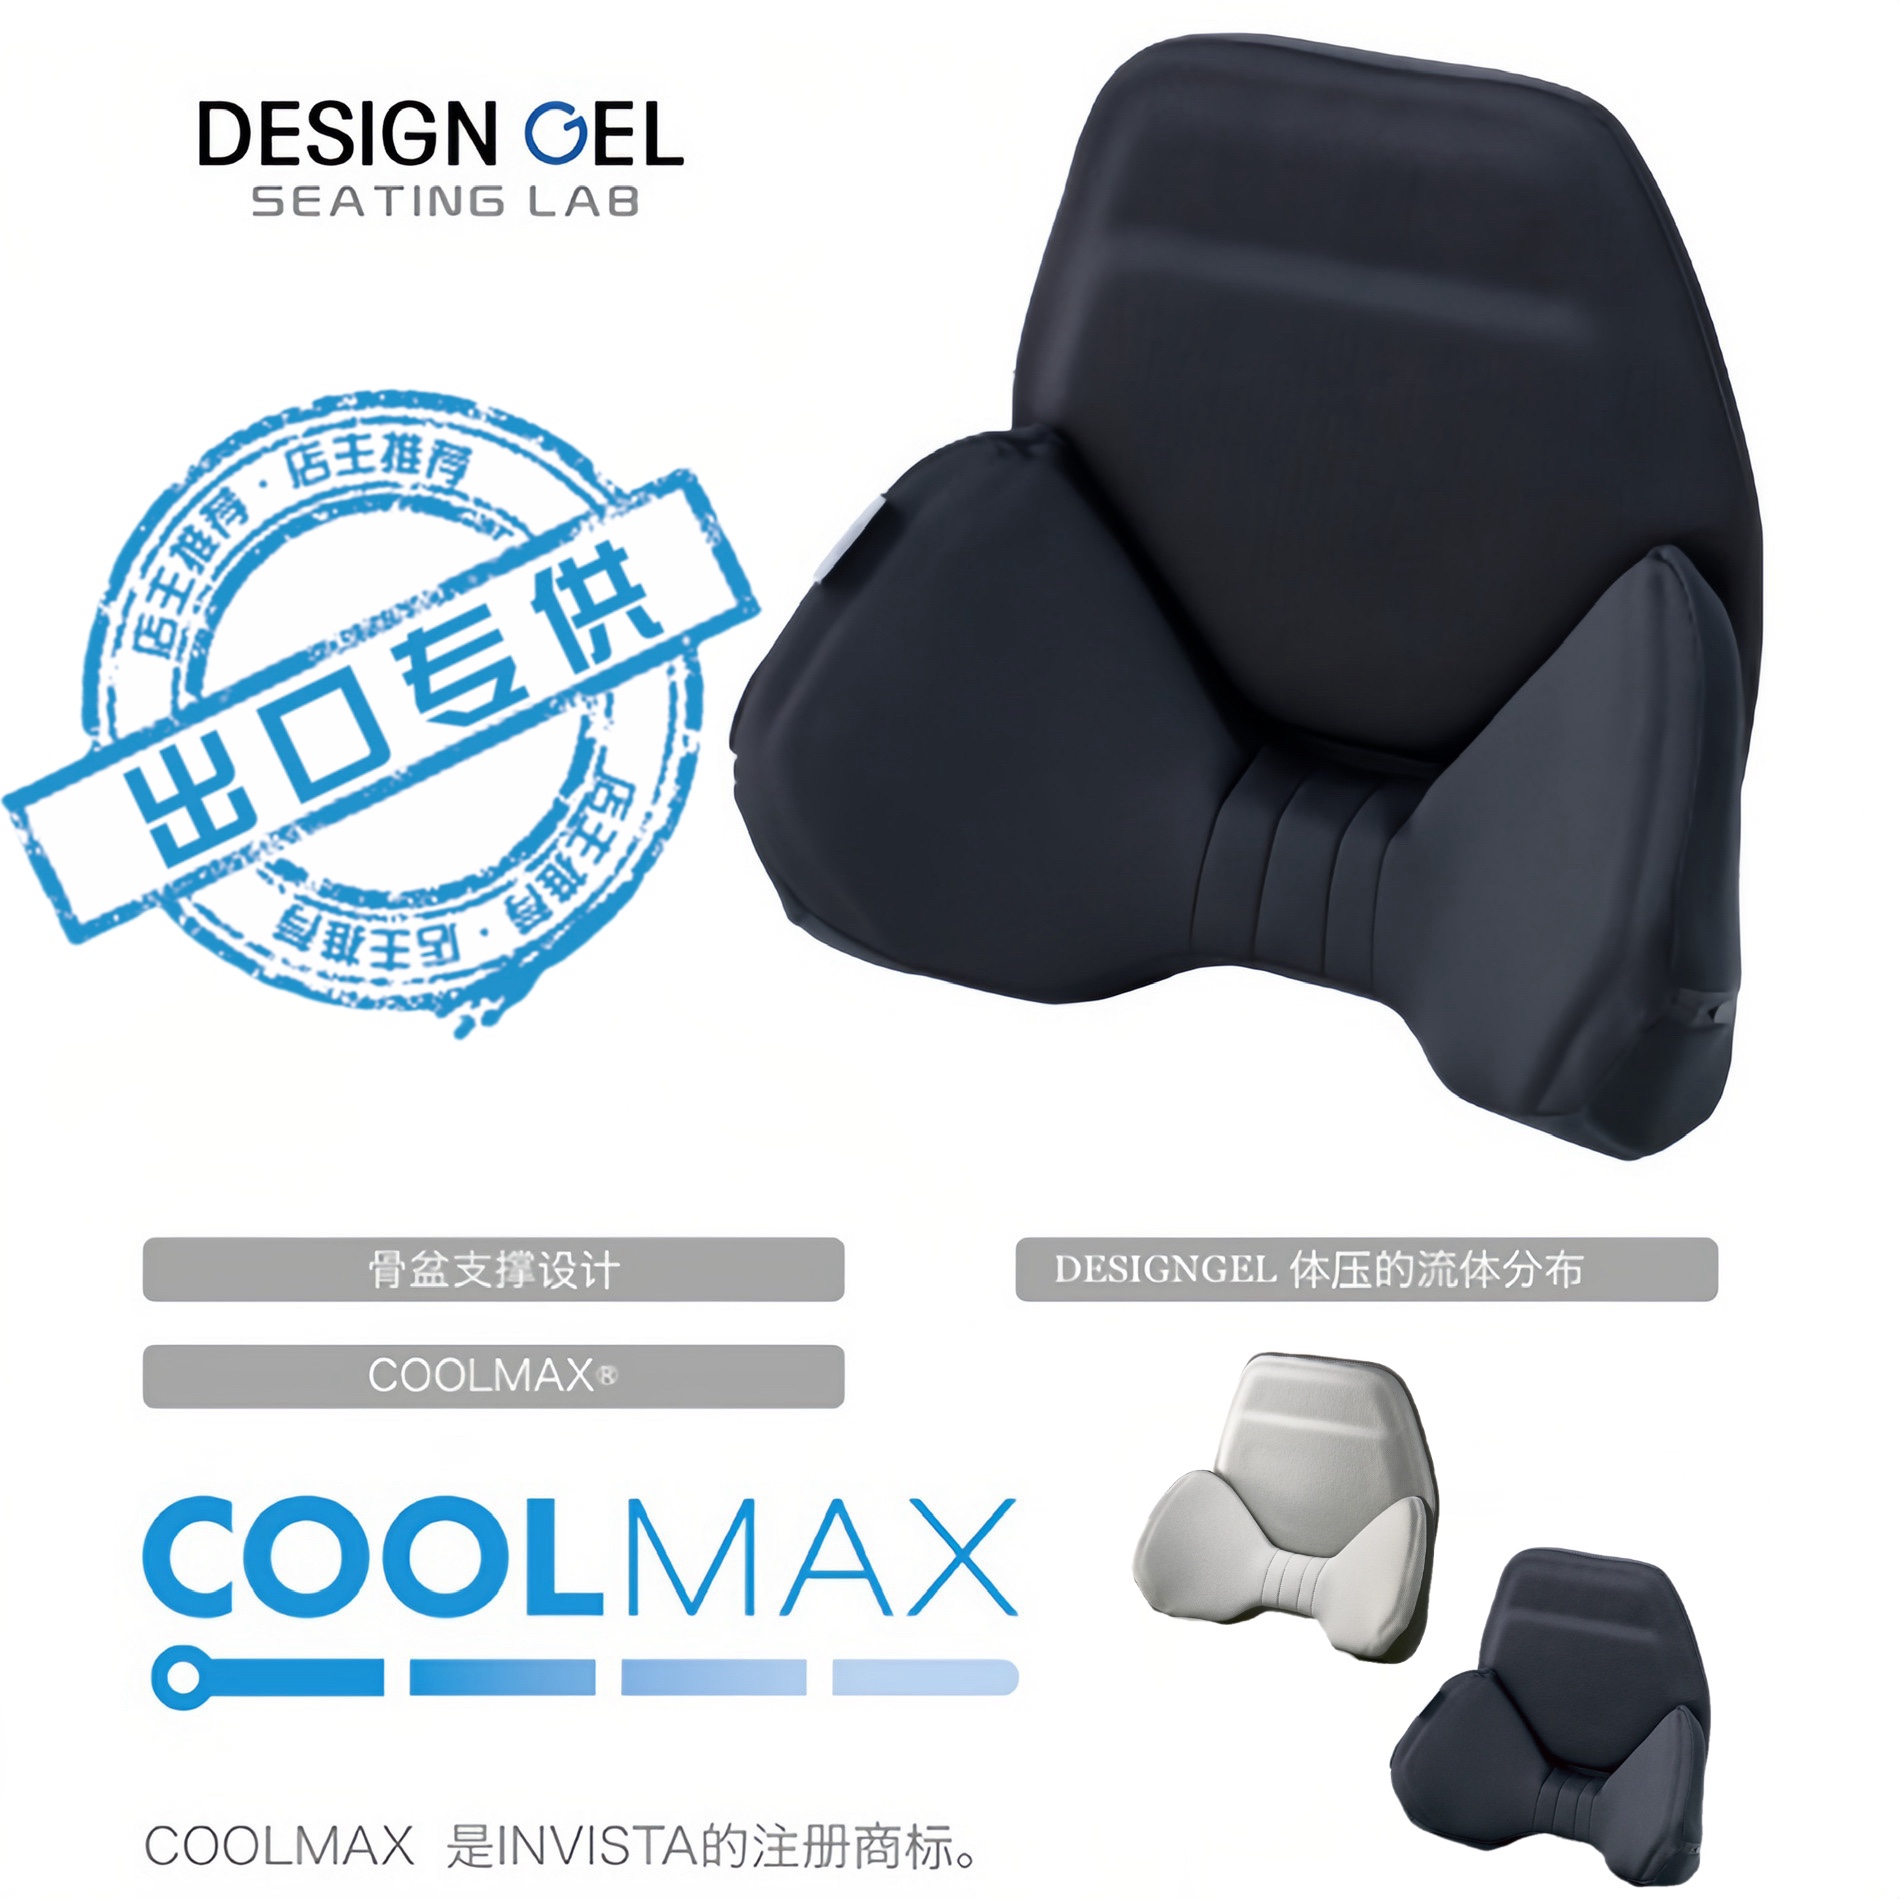 DesignGel Double Support Construction Design German Basf Import Memory Medical Gel Waist Leaning Back Cushions-Taobao